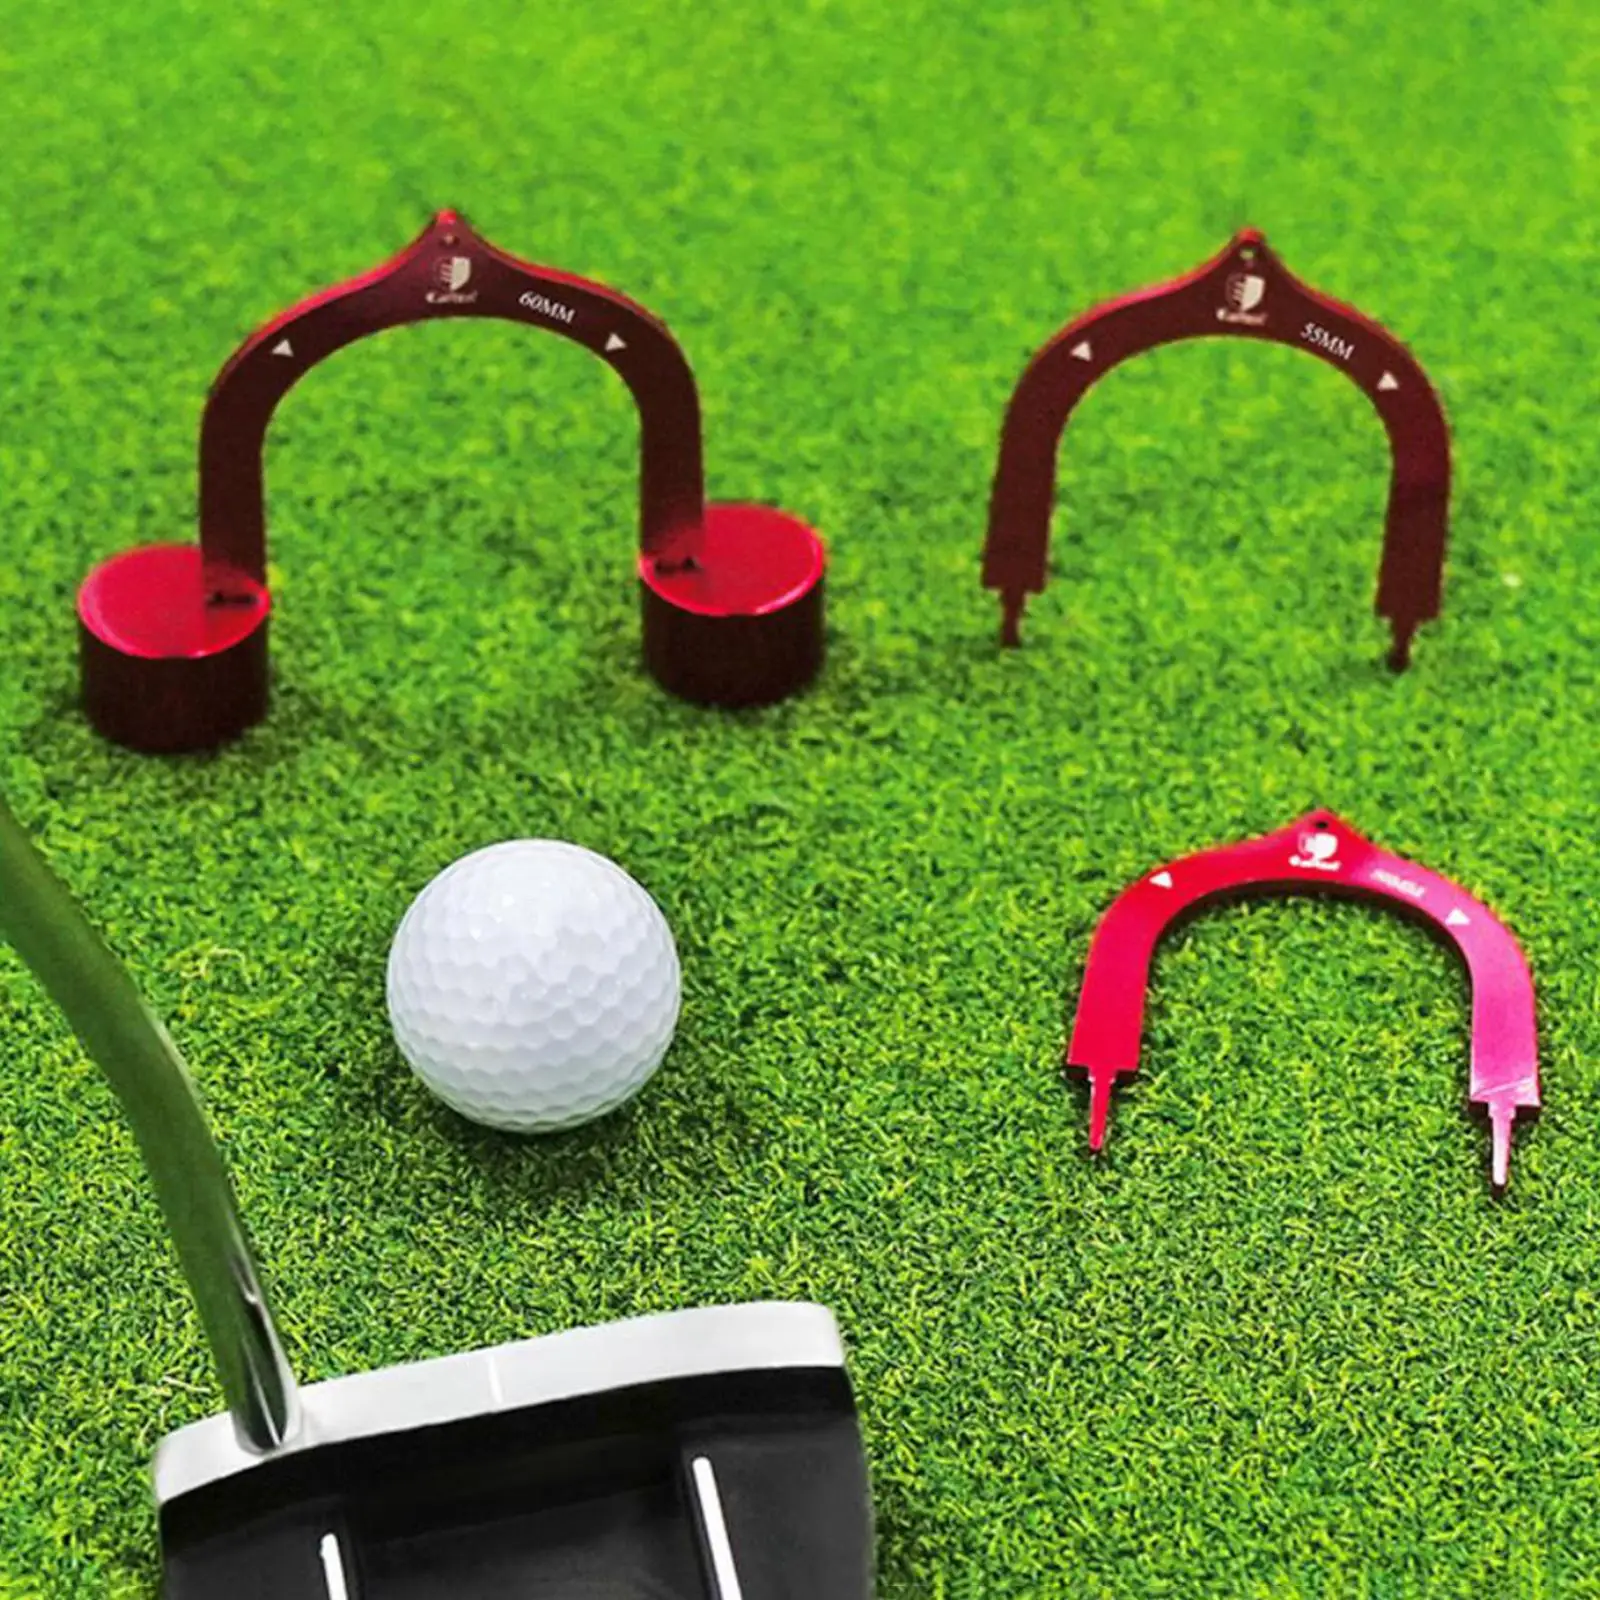 3x Golf Putting Gates Golf Training Aid Target Putter Gates Golf Accessories